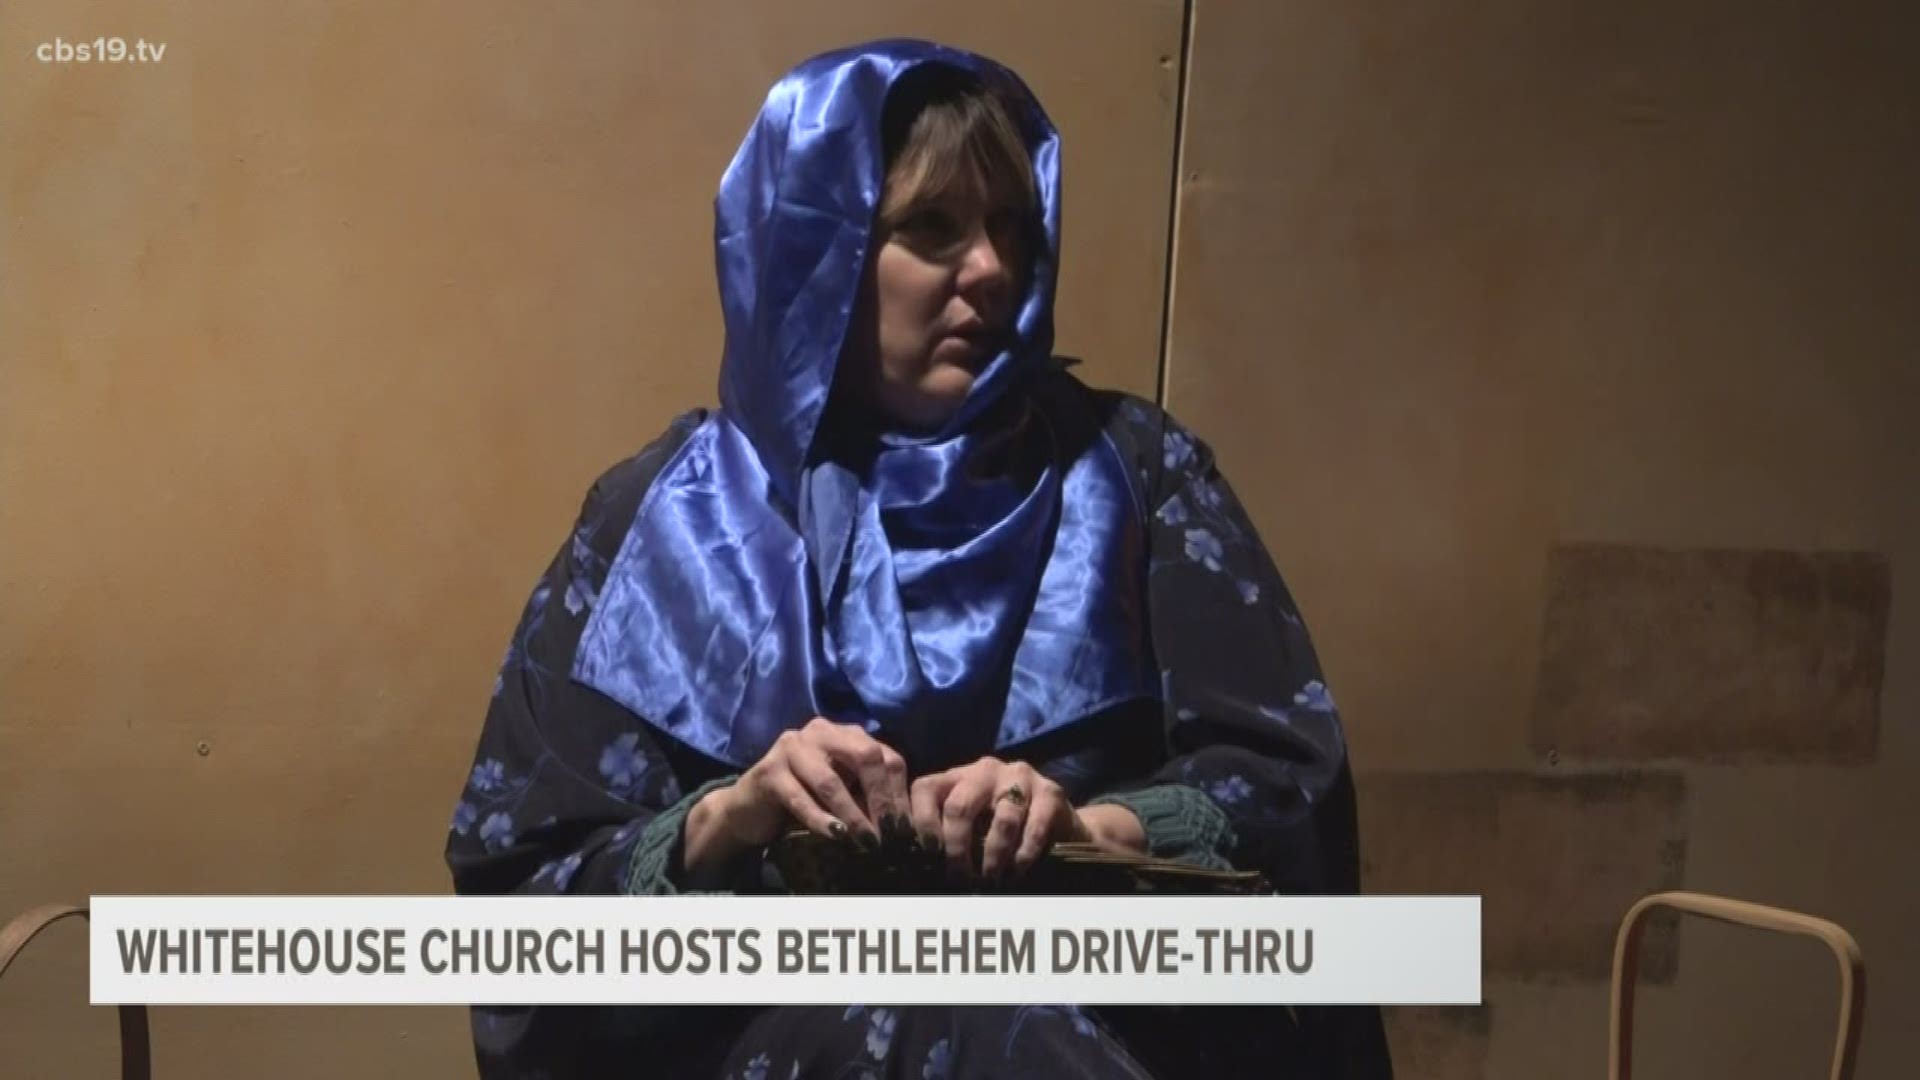 WHITEHOUSE CHURCH HOSTS NATIVITY SCENE DRIVE-THRU